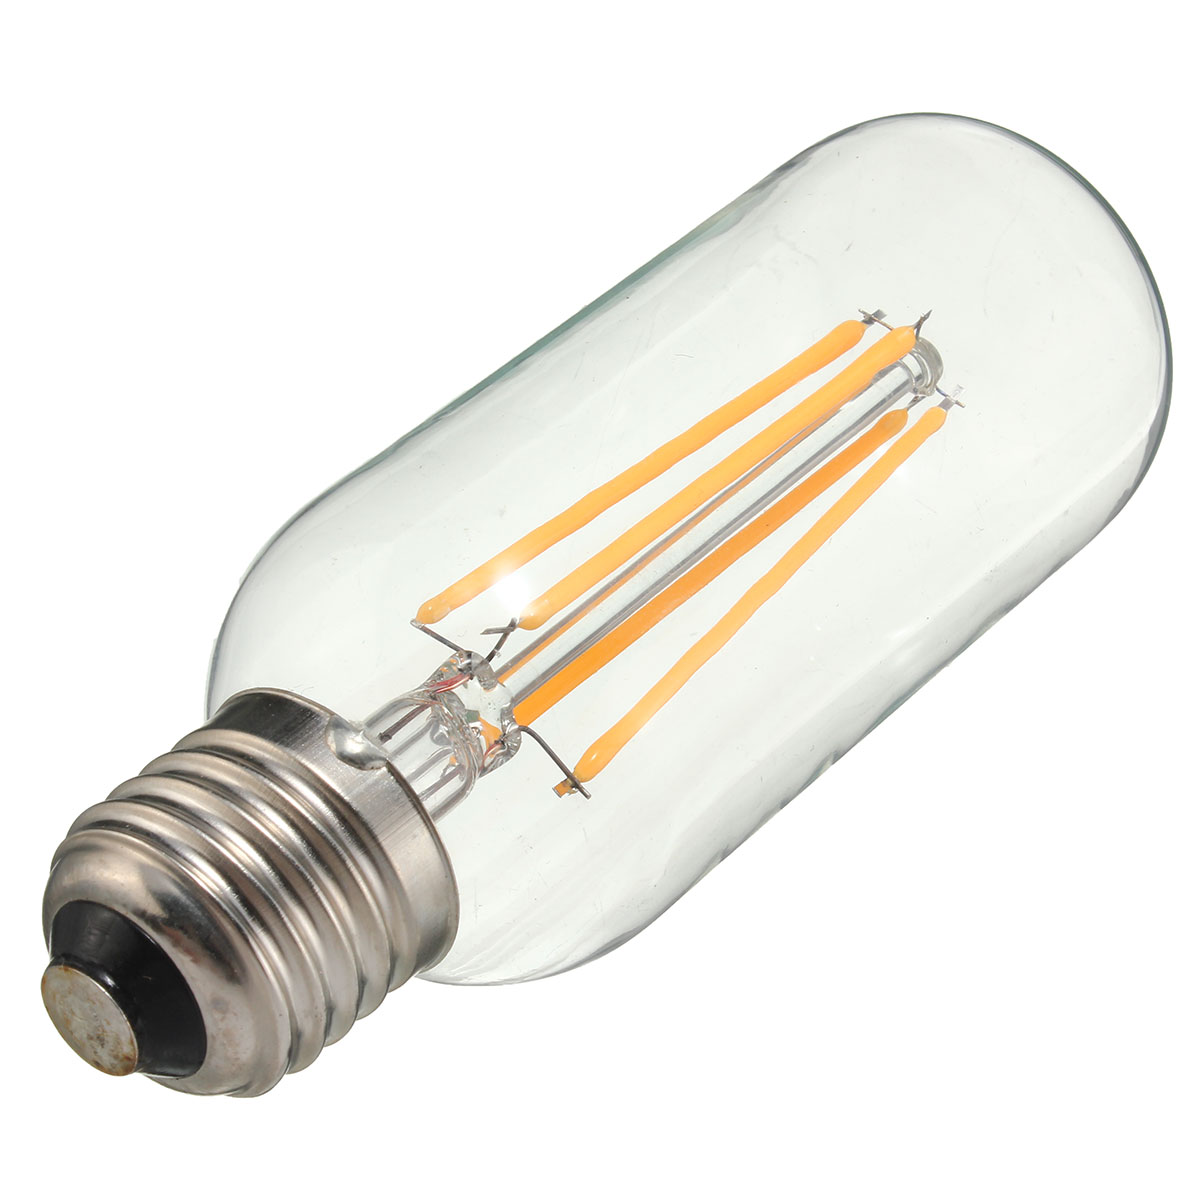 Kingso-T45-E26E27-Dimmable-Edison-LED-Bulbs-Warm-White-COB-Vintage-Light-400LM-4W-110V220V-1102703